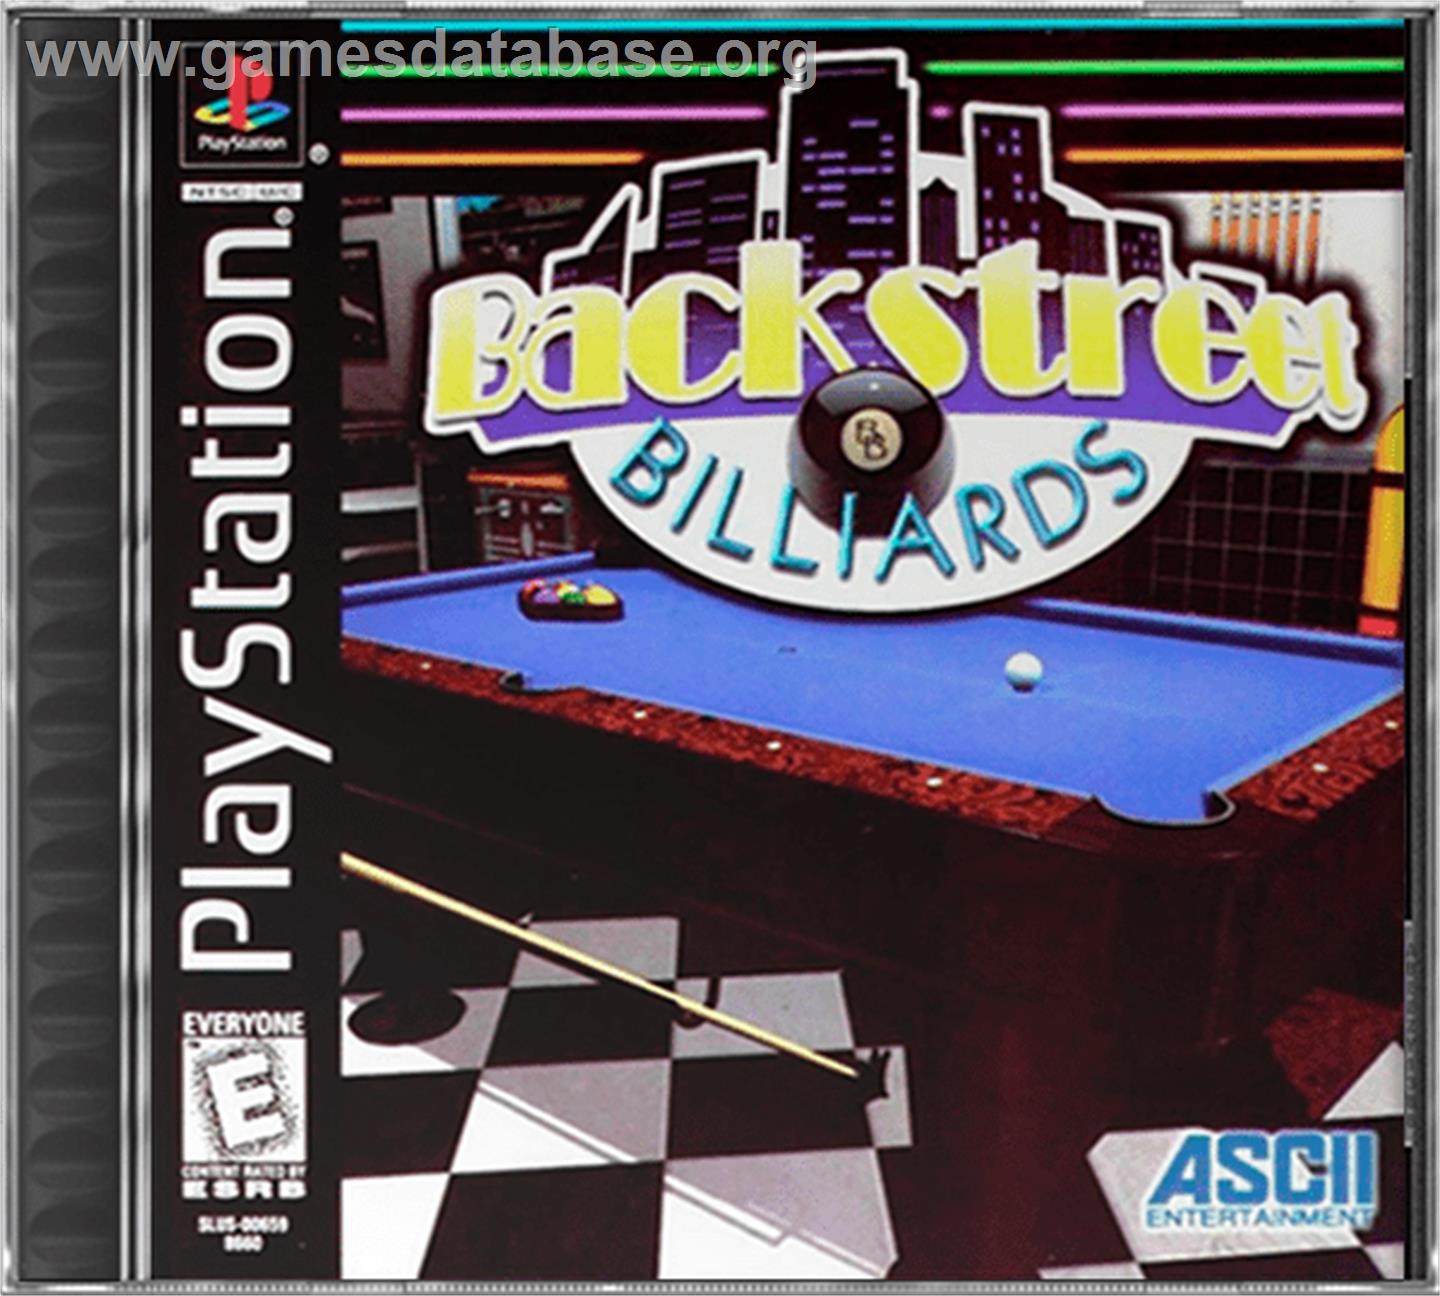 Backstreet Billiards - Sony Playstation - Artwork - Box